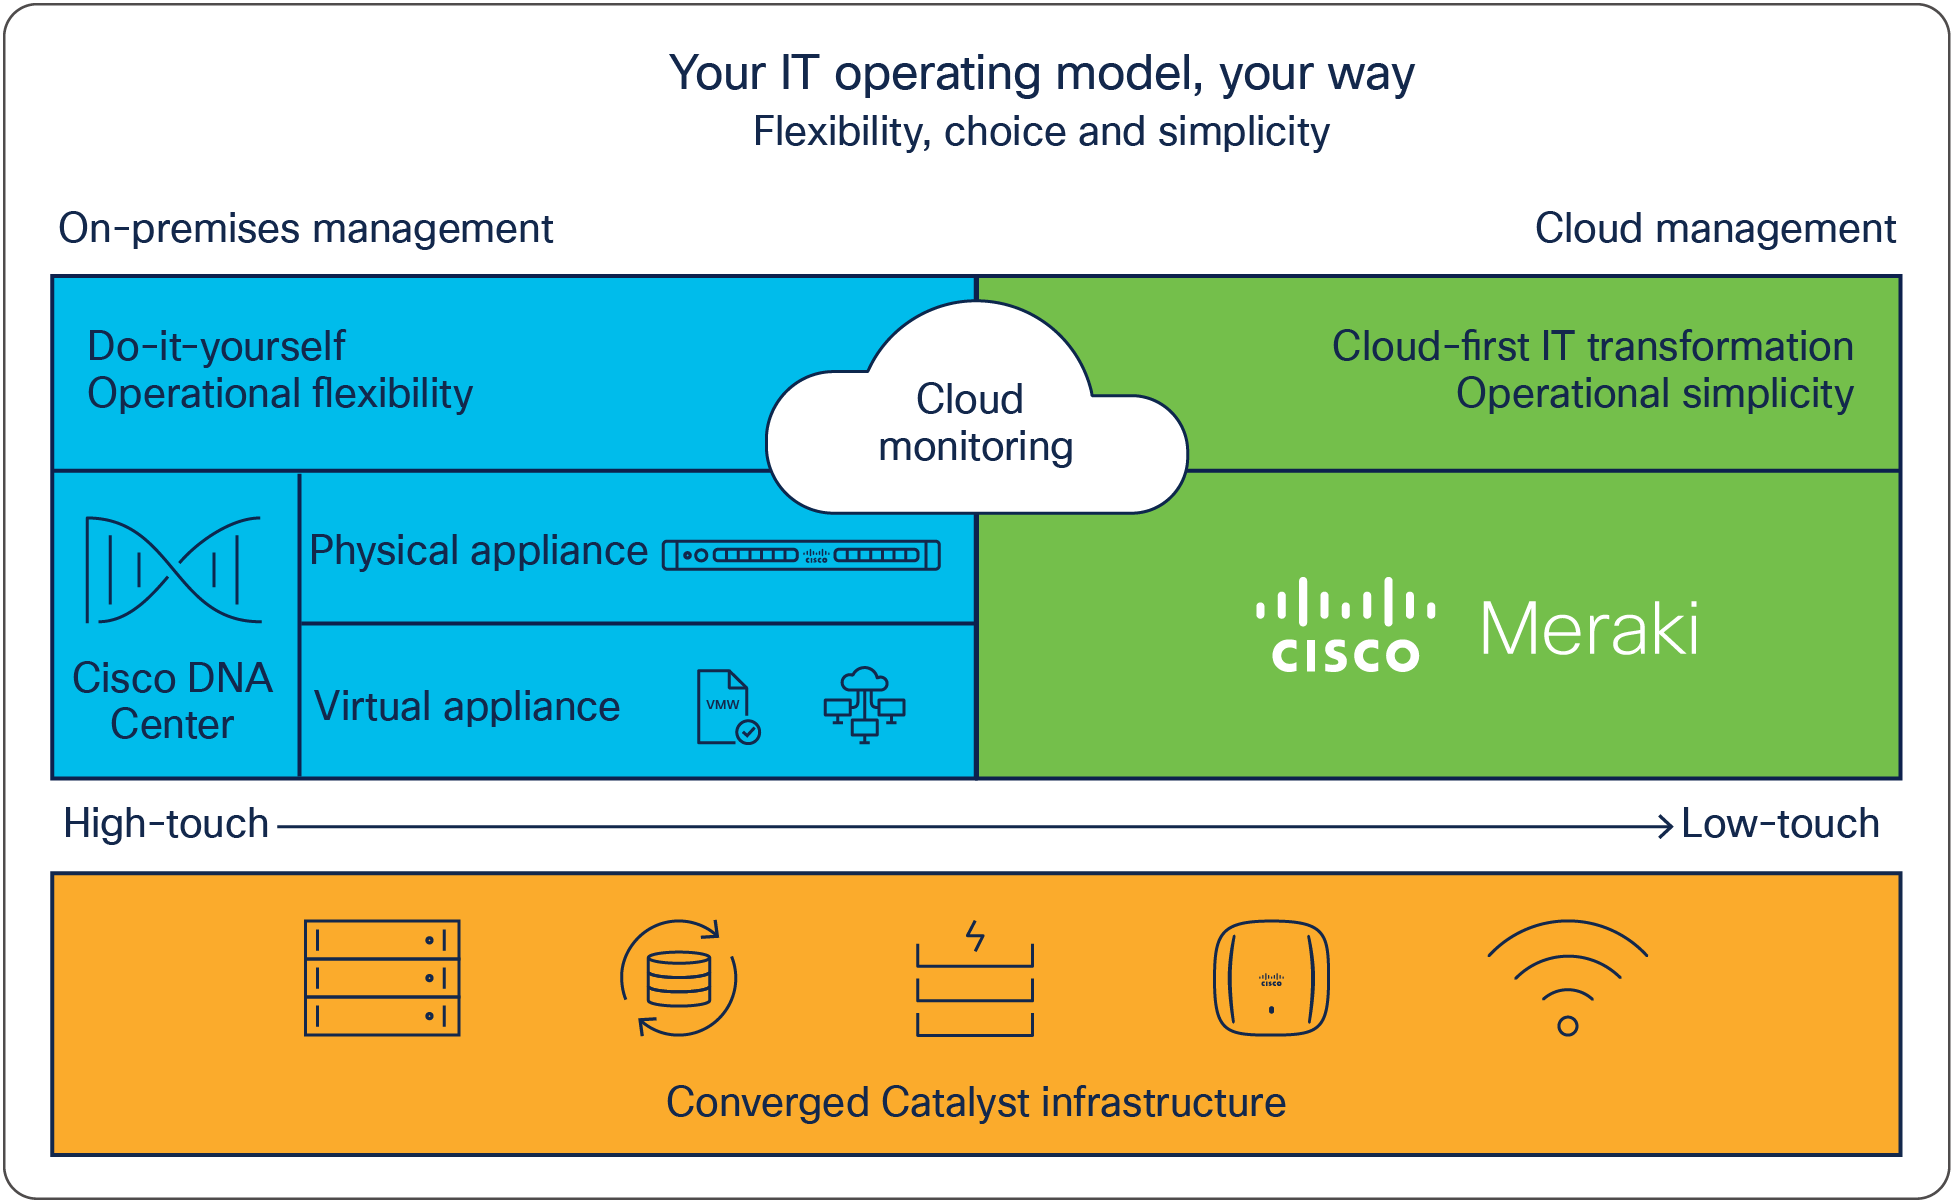 The Cisco full-spectrum operating model